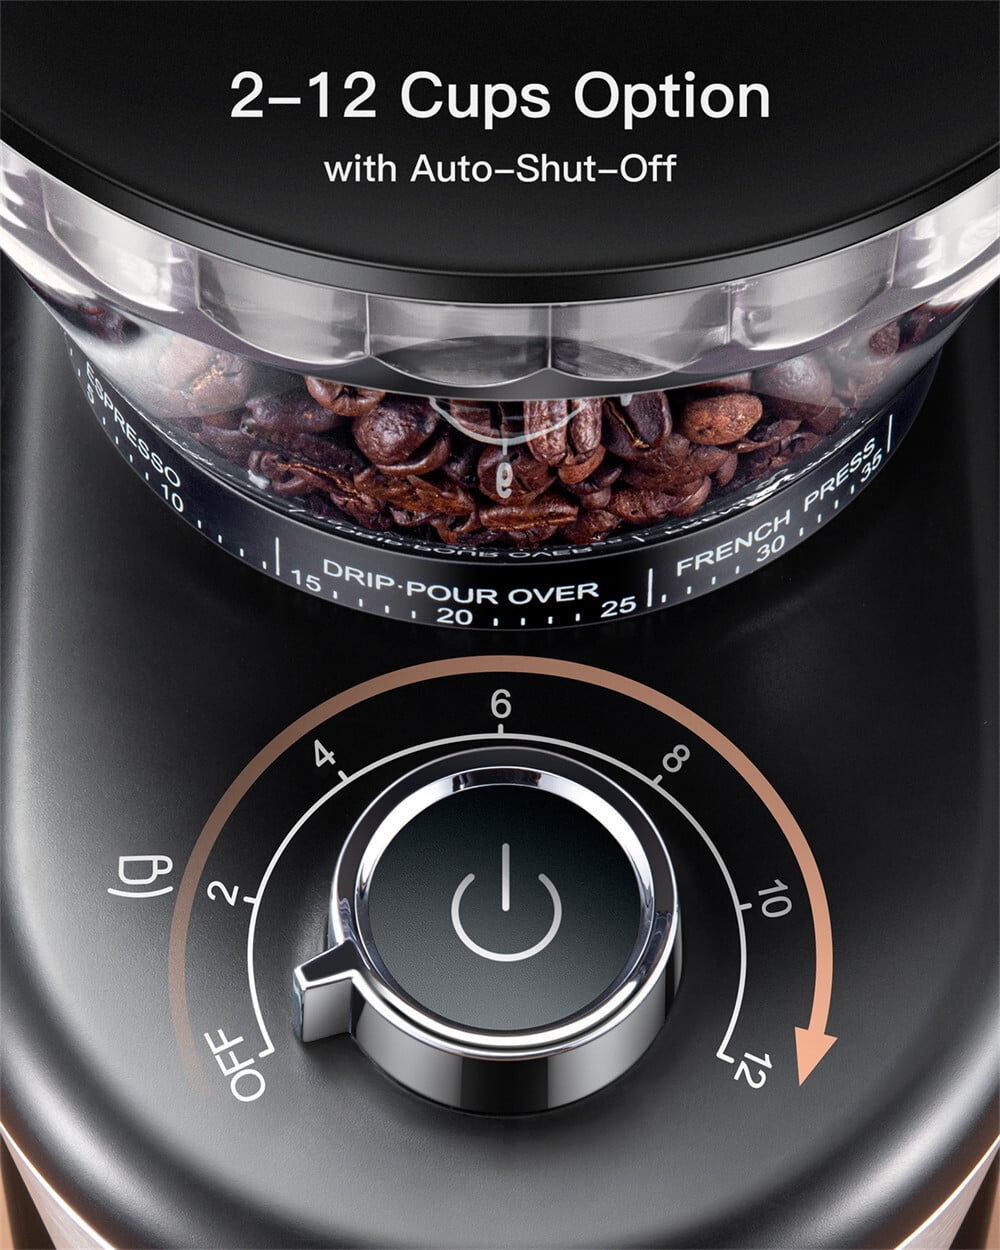 AC-Powered Burr Grinder,Sulypo Coffee Grinder with Cone Ceramic  Mills,Adjustable,Slow-Grind Result Better Taste Coffee 45g Bean